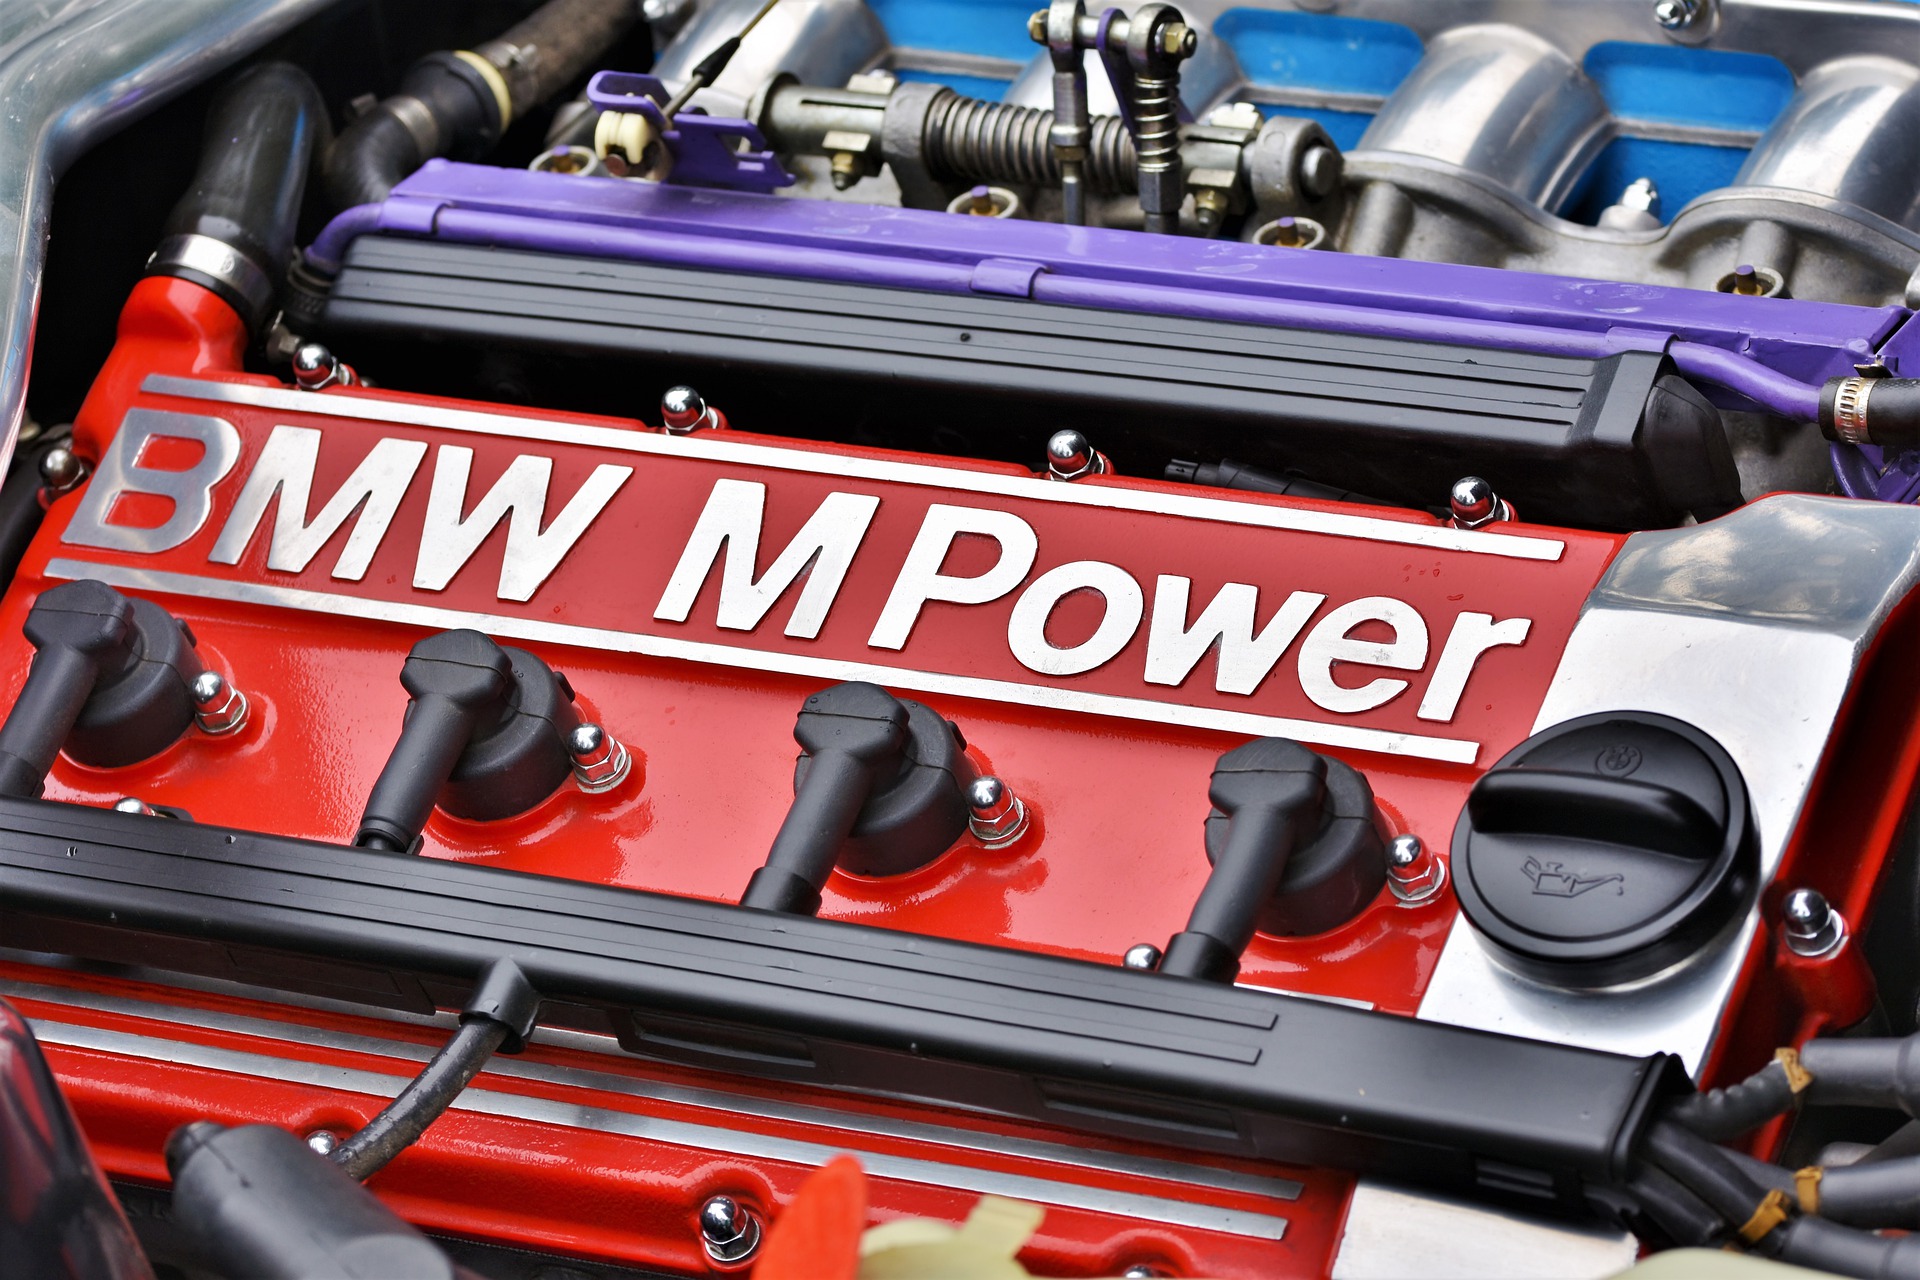 BMW M Power sports car engine